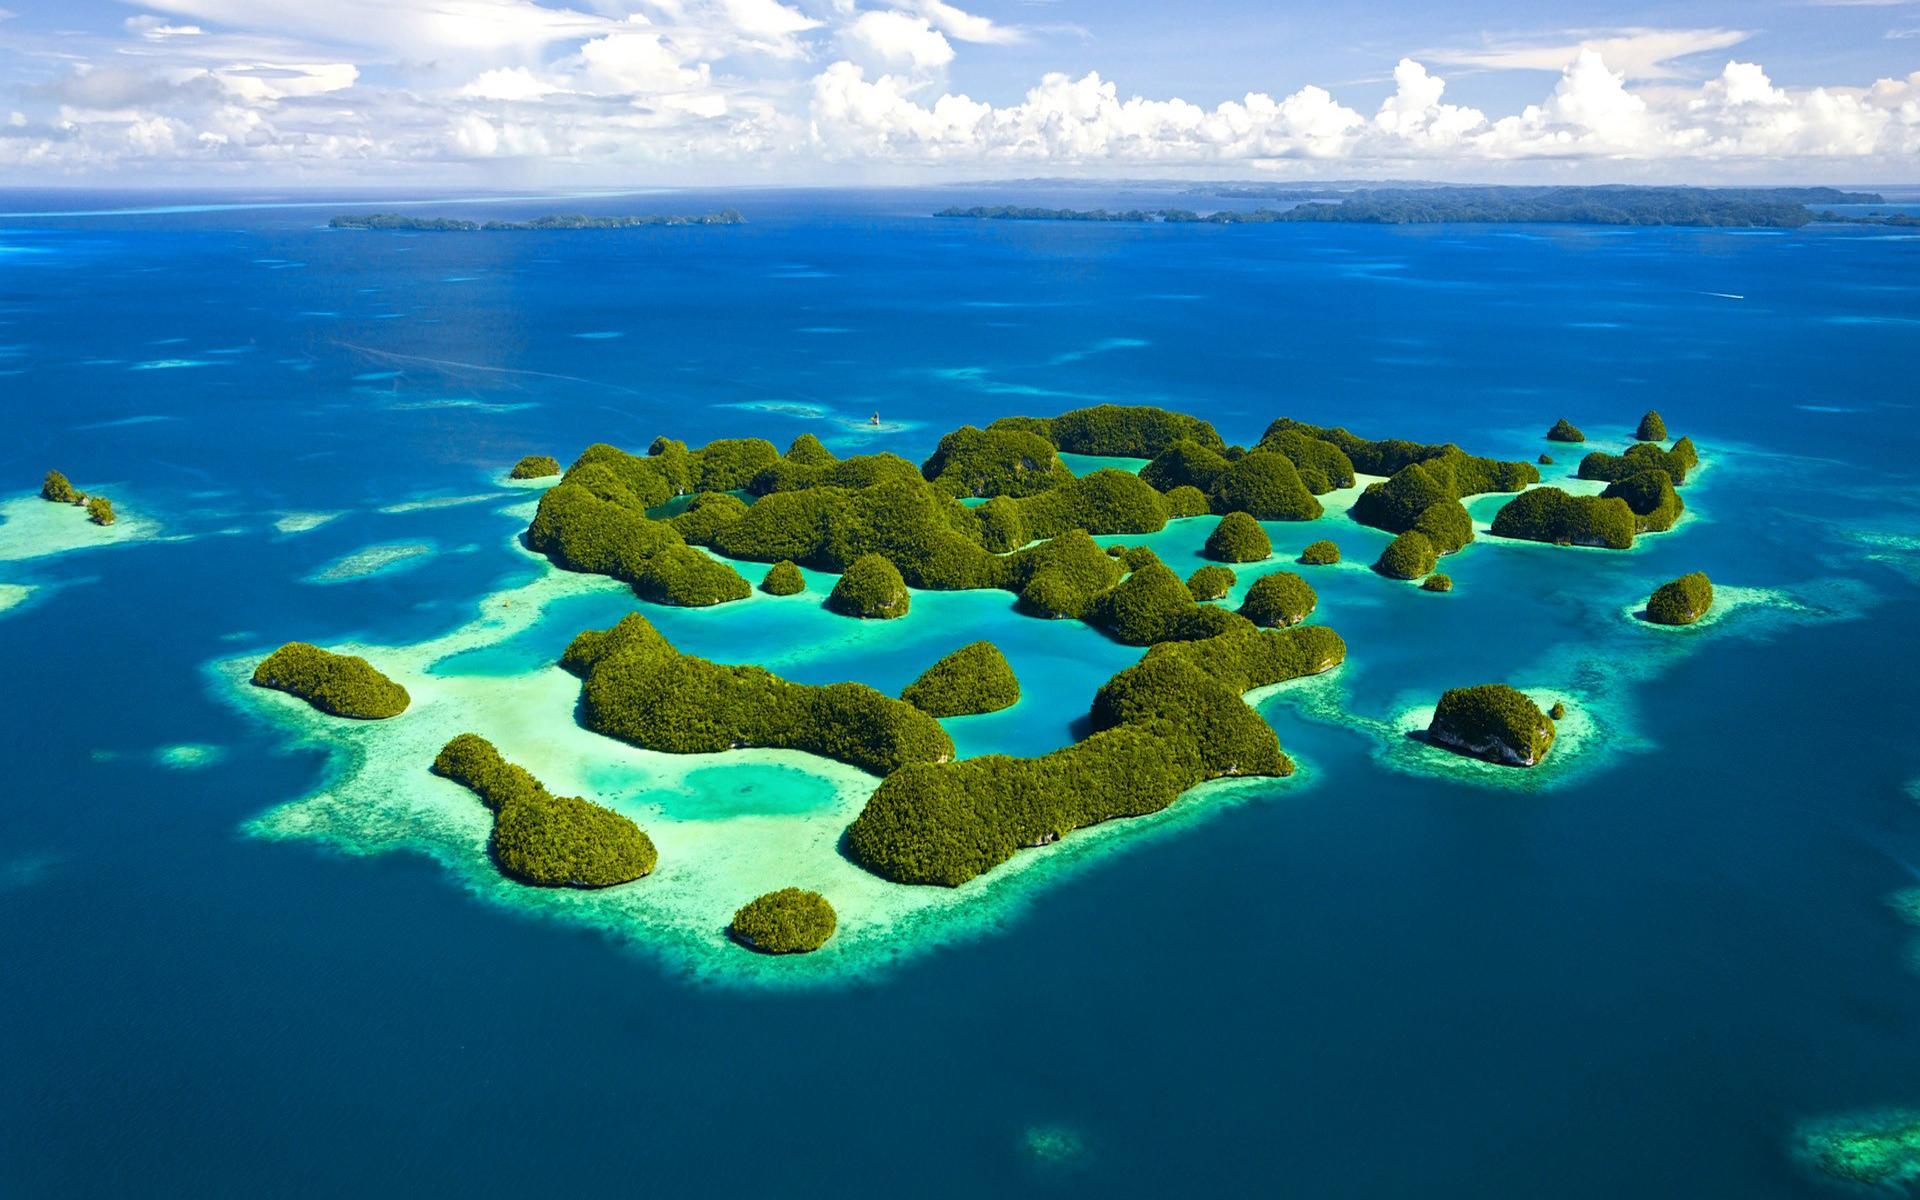 The island was beautiful. Рок-Айлендс, Палау. Макронезия Палау. Остров Палау Микронезия. Атолл Нукуоро в Микронезии.